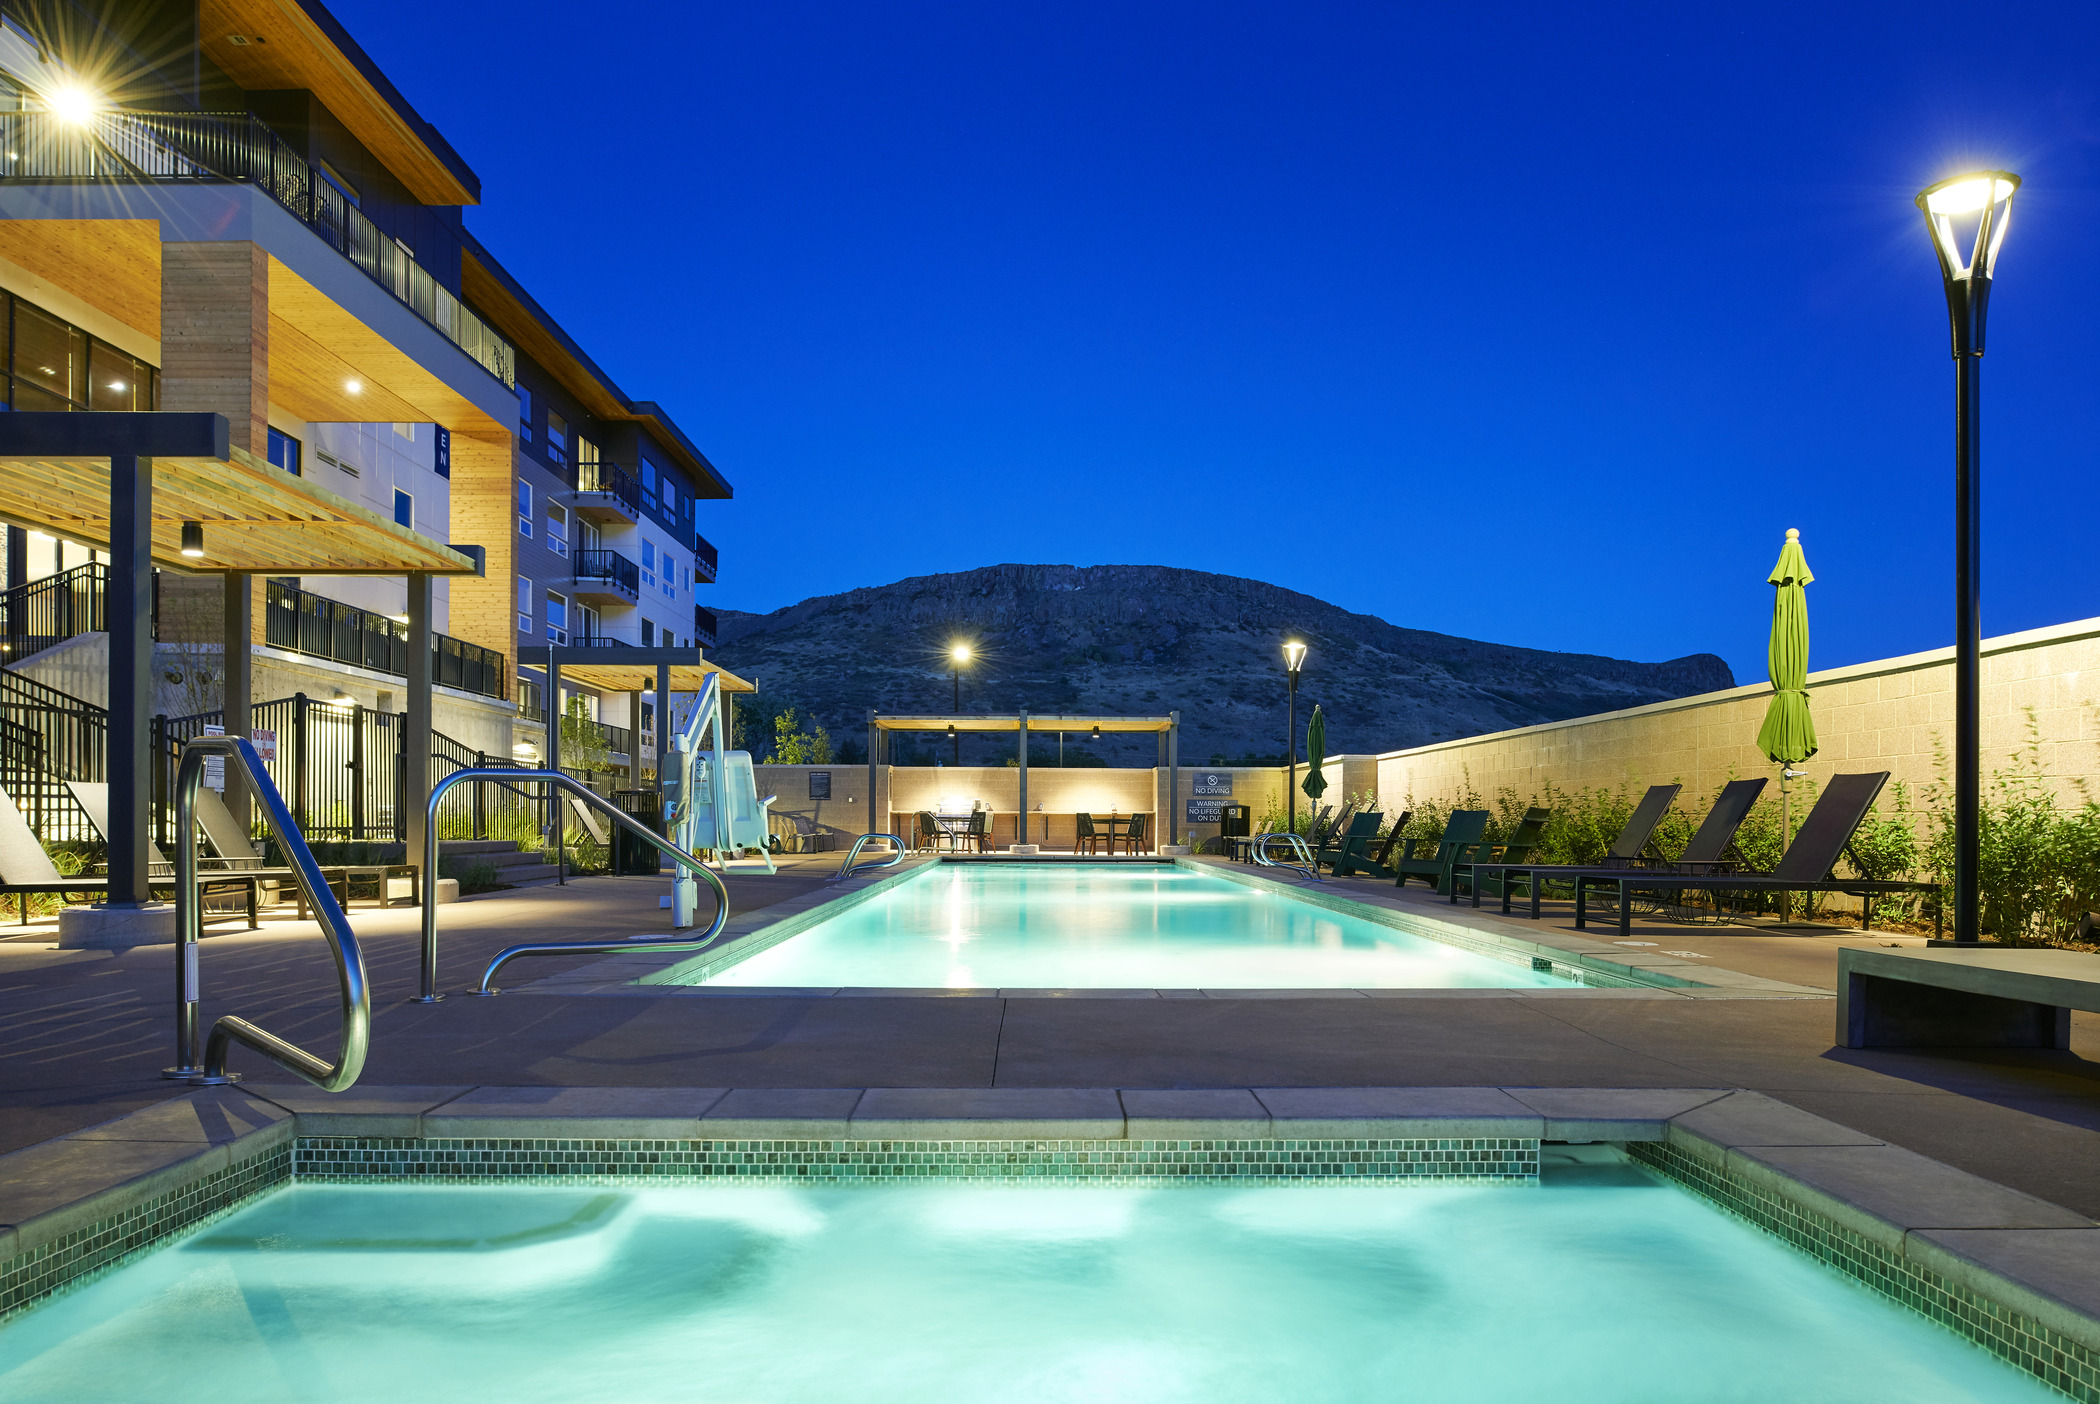 Image of Epoque Golden Apartment Community pool at dusk